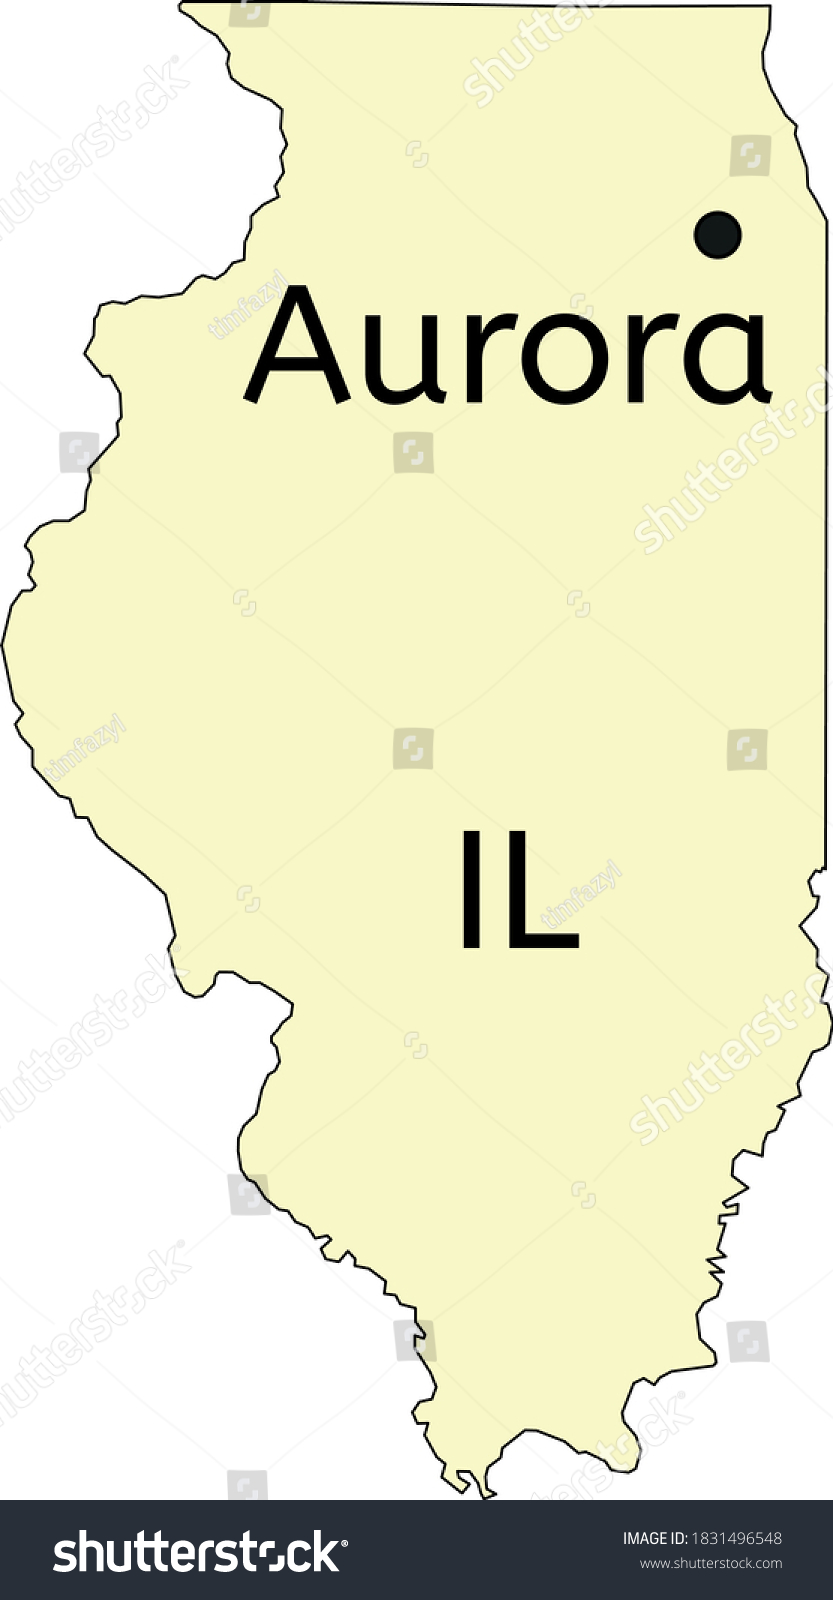 SVG of Aurora city location on Illinois map svg